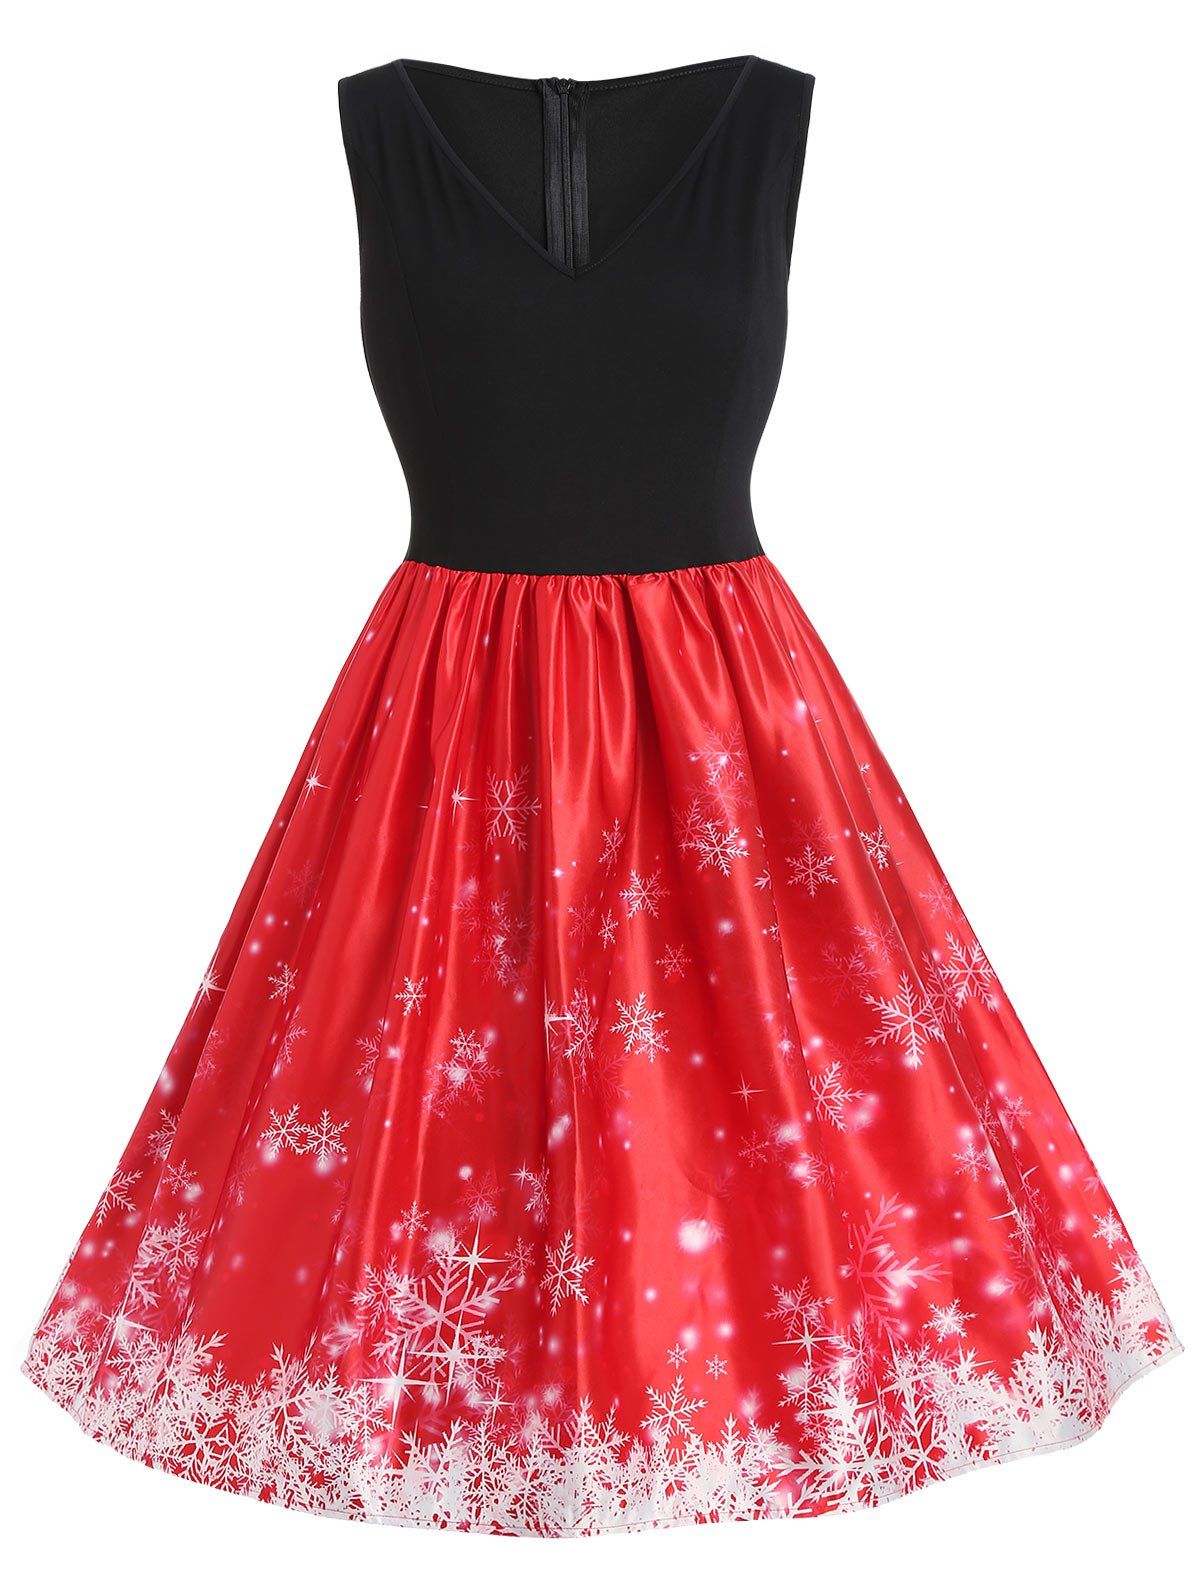 Plus Size Vintage Snowflake Christmas Dress - RED L